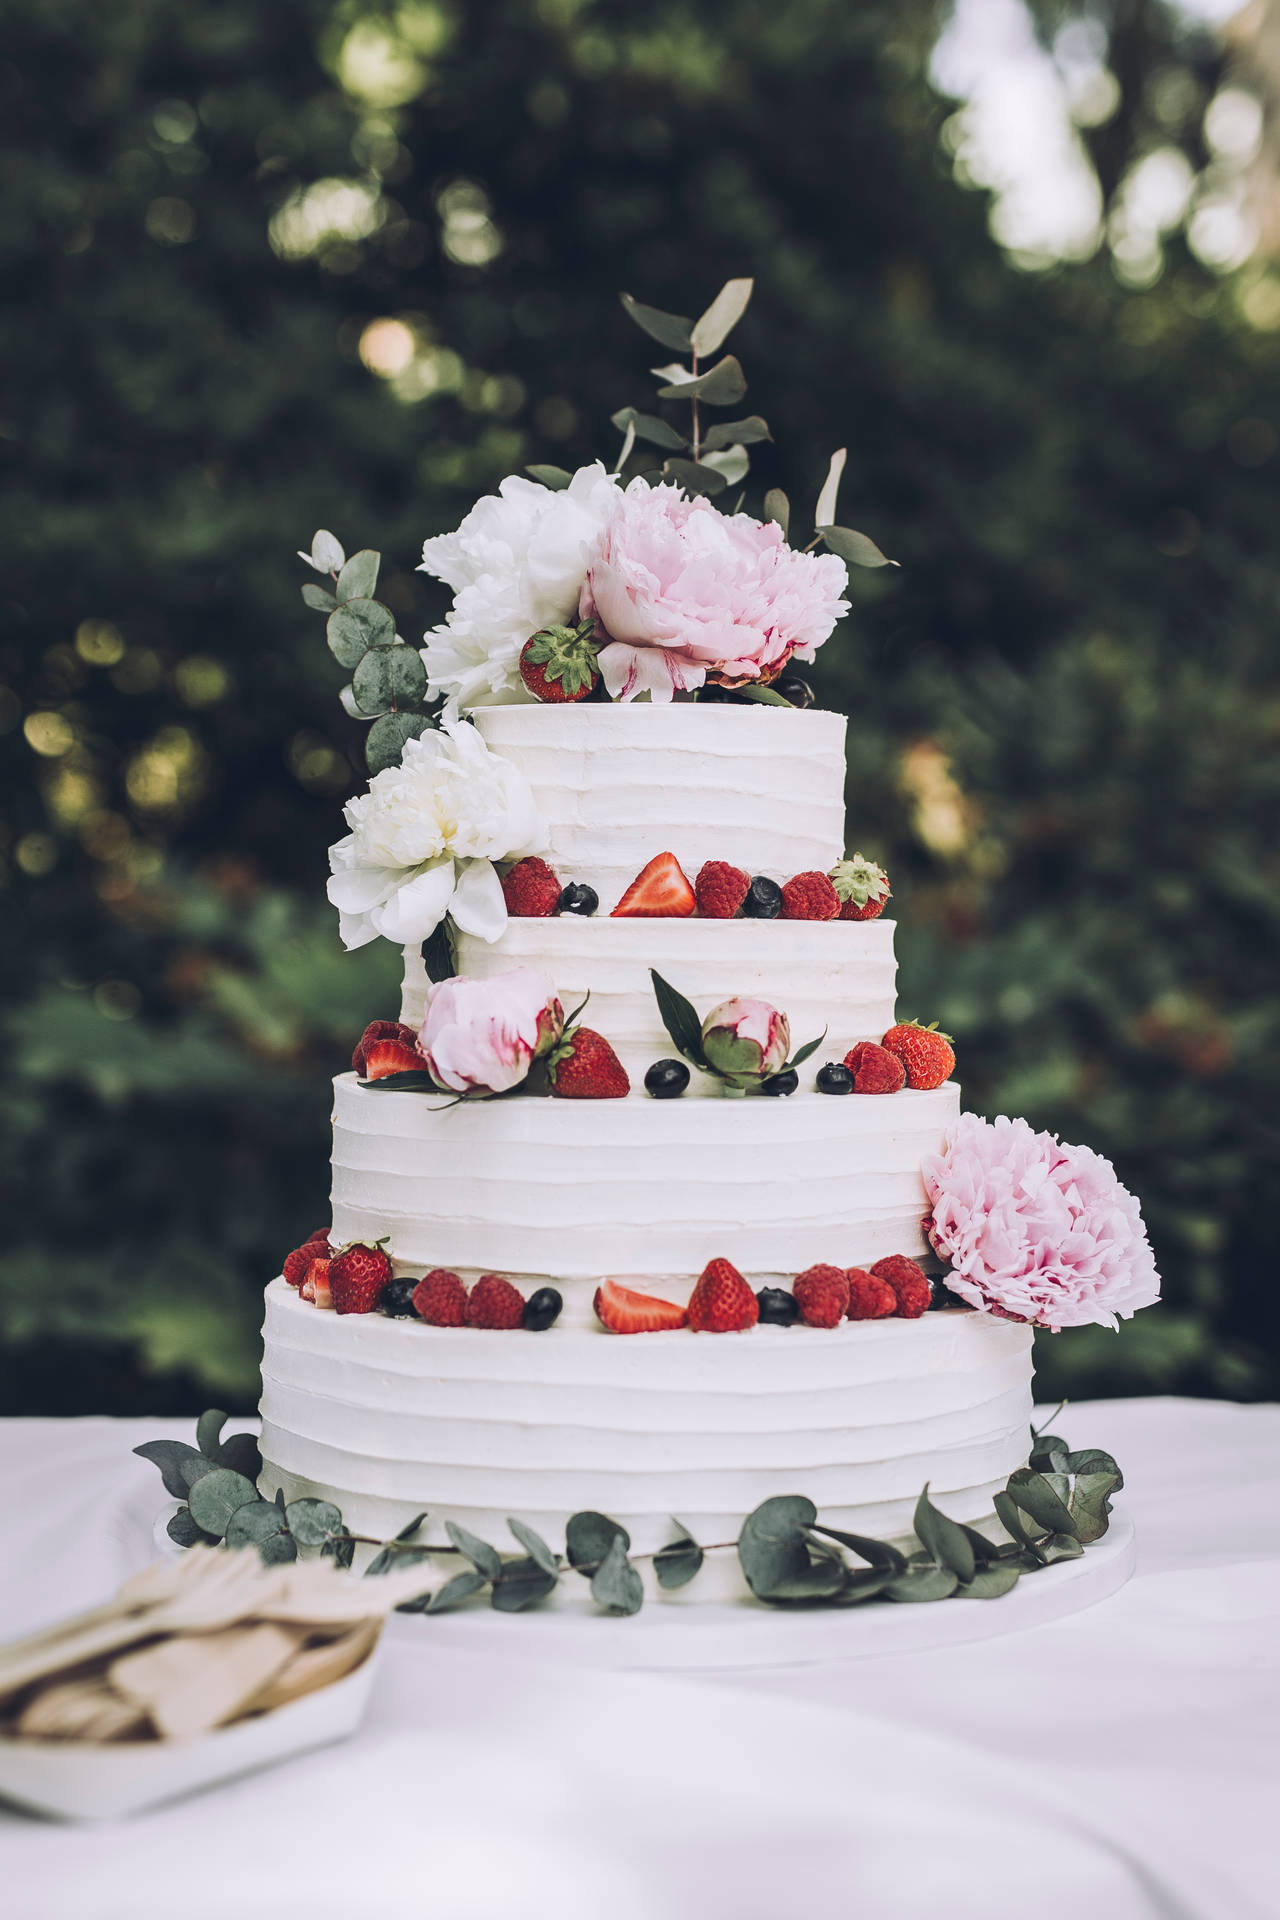 Mixed Berries Roses Wedding Cake Wallpaper